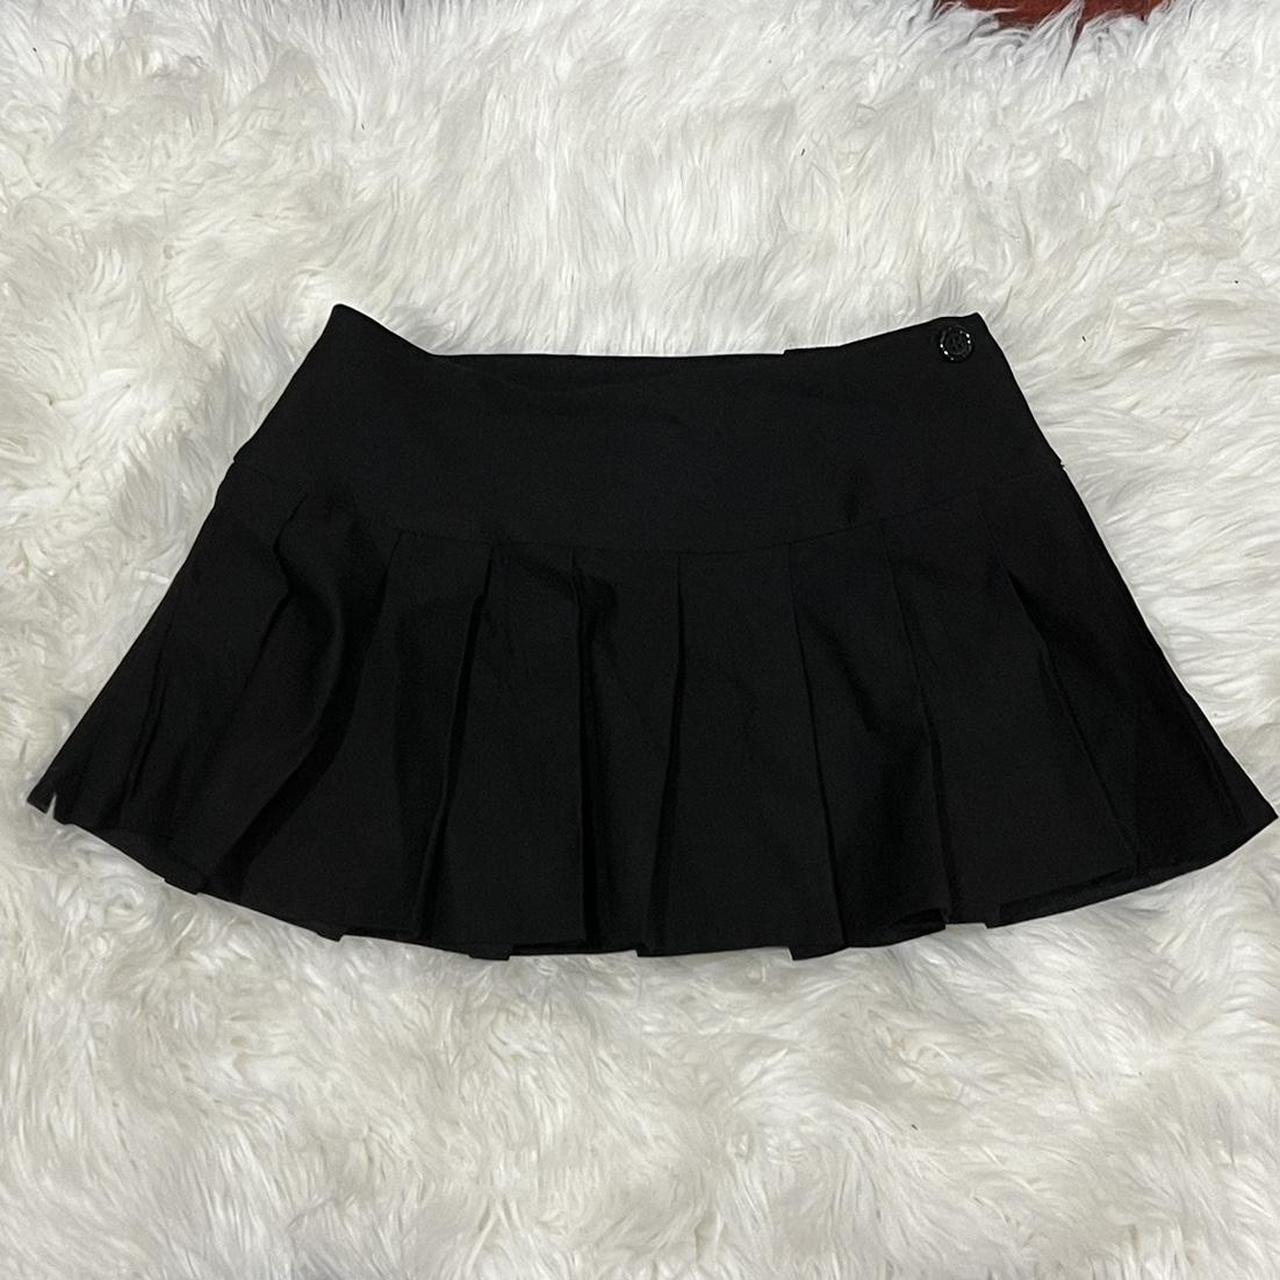 MOTEL X OLIVIA NEILL Casini Pleated Micro Skirt in Tailoring Black